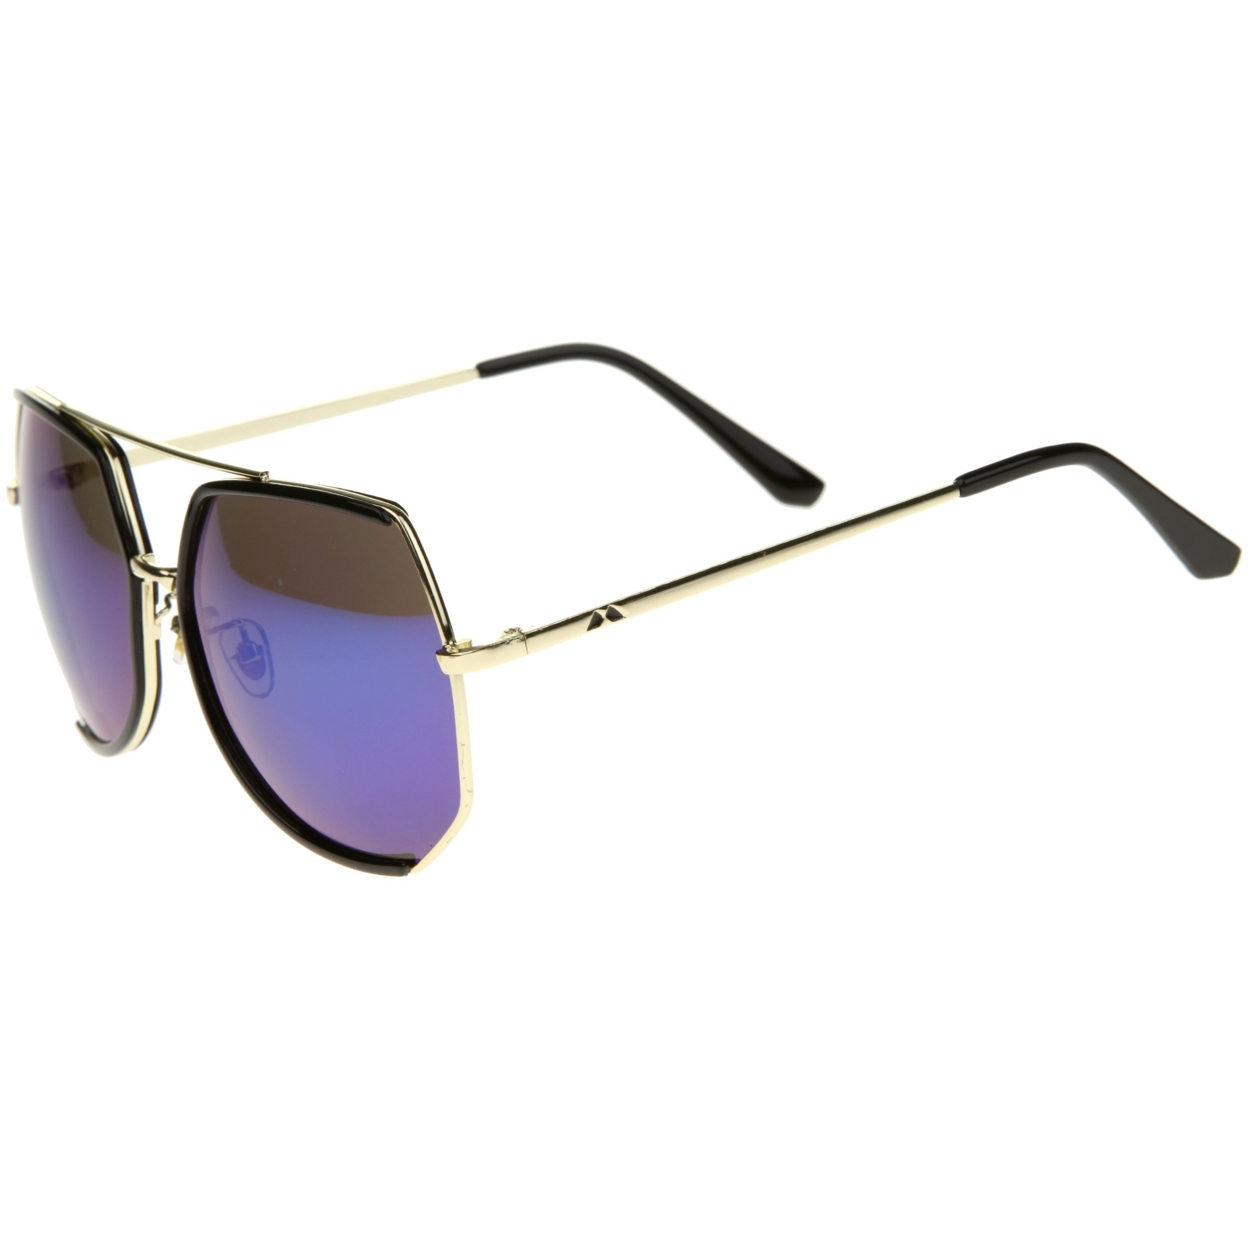 Womens Fashion Gold Metal Crossbar Mirror Lens Oversized Sunglasses 64mm - Black-Gold / Blue Mirror